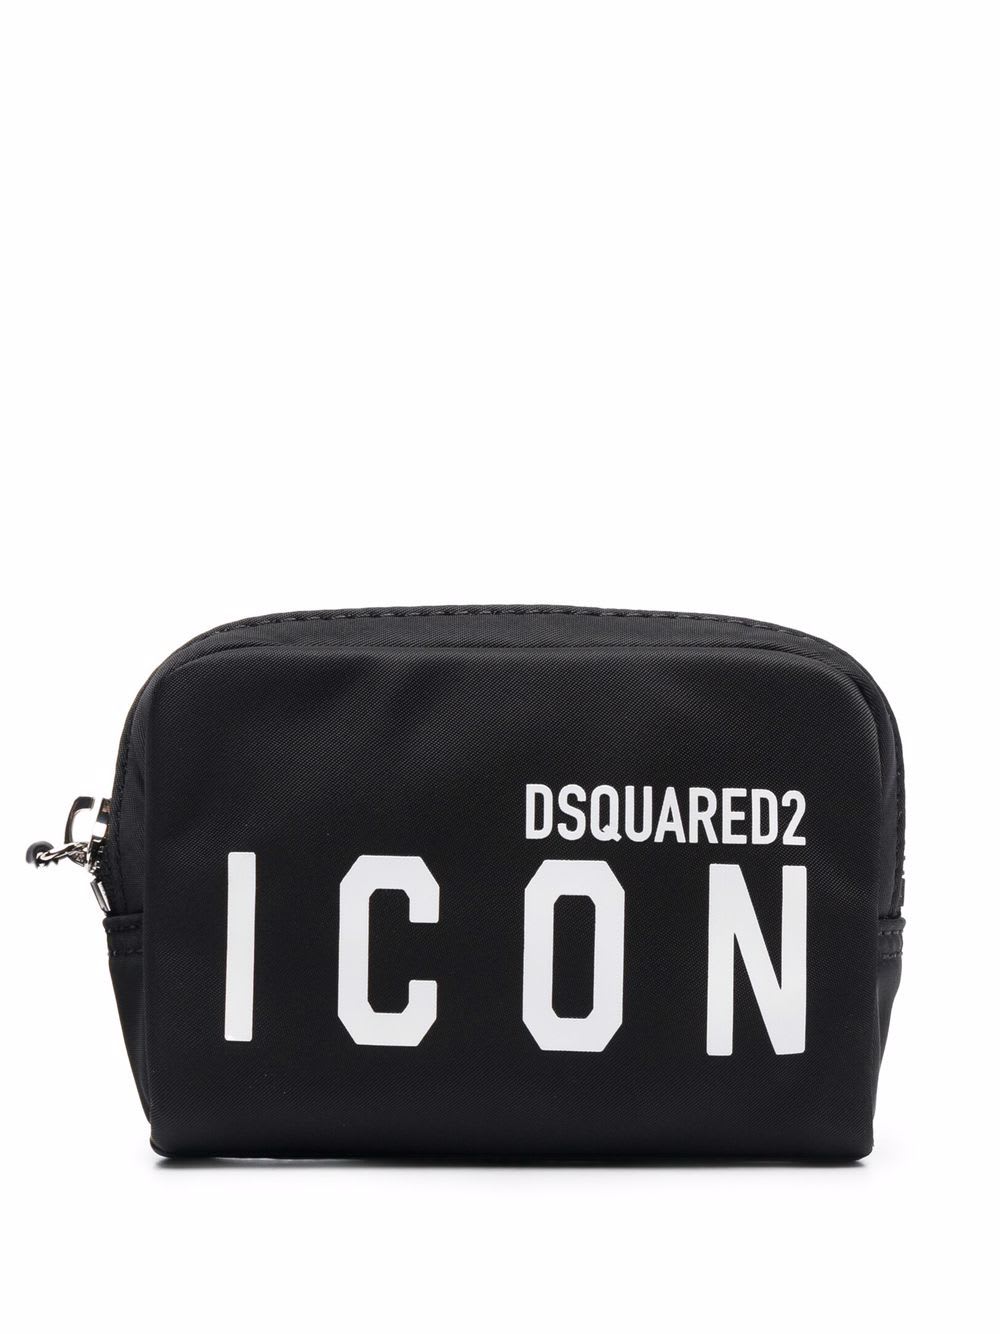 Dsquared2 Woman Wallet In Black Nylon With White Icon Logo